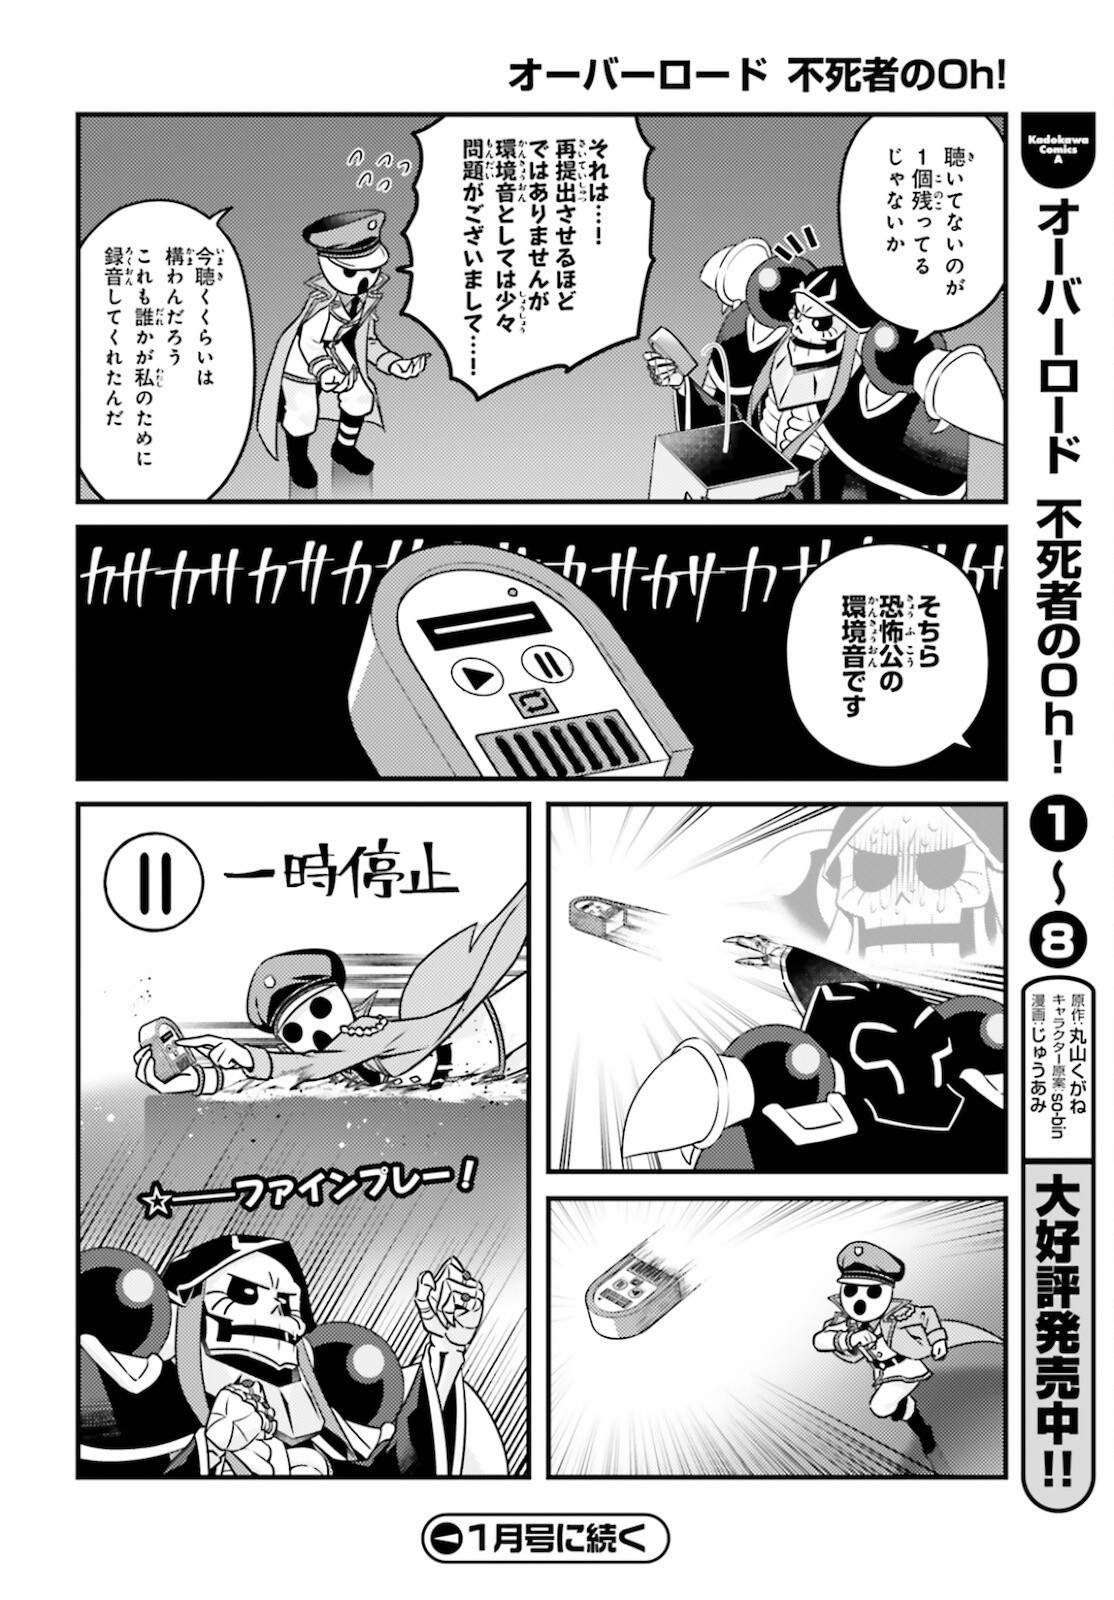 Overlord-Fushisha-no-Oh - Chapter 53 - Page 20